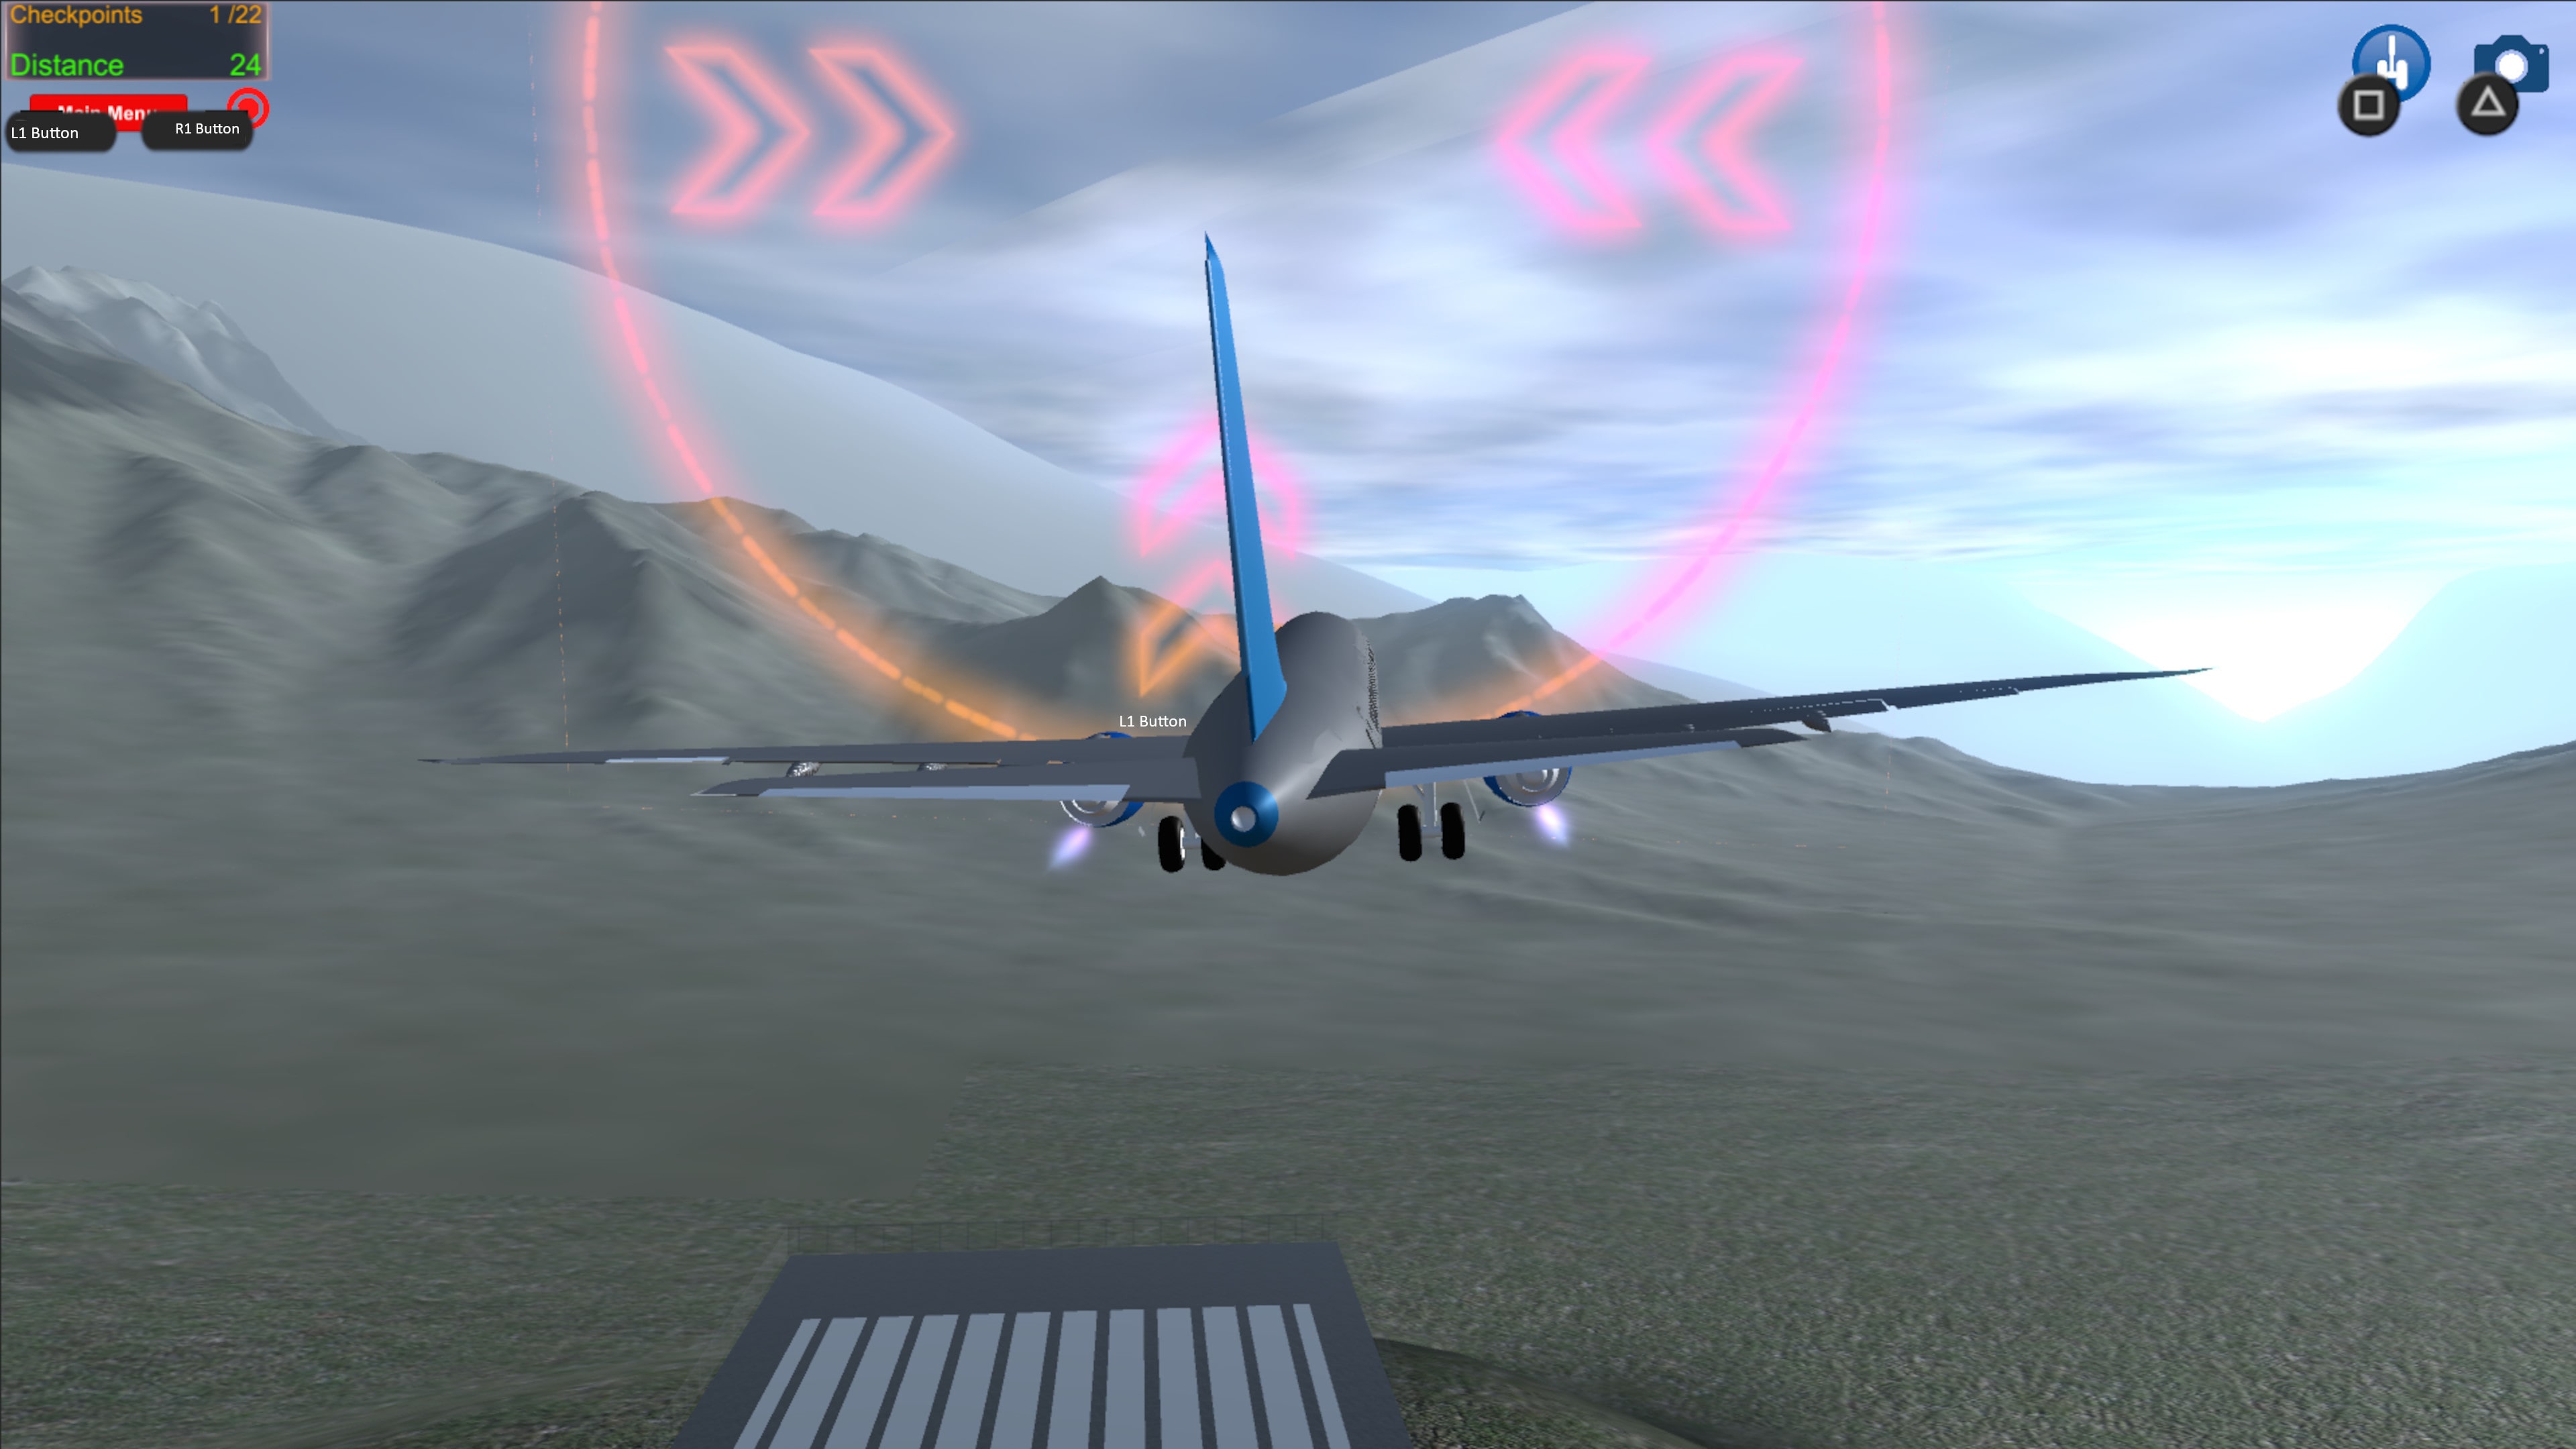 Island Flight Simulator Ps4 (sony PlayStation 4) for sale online